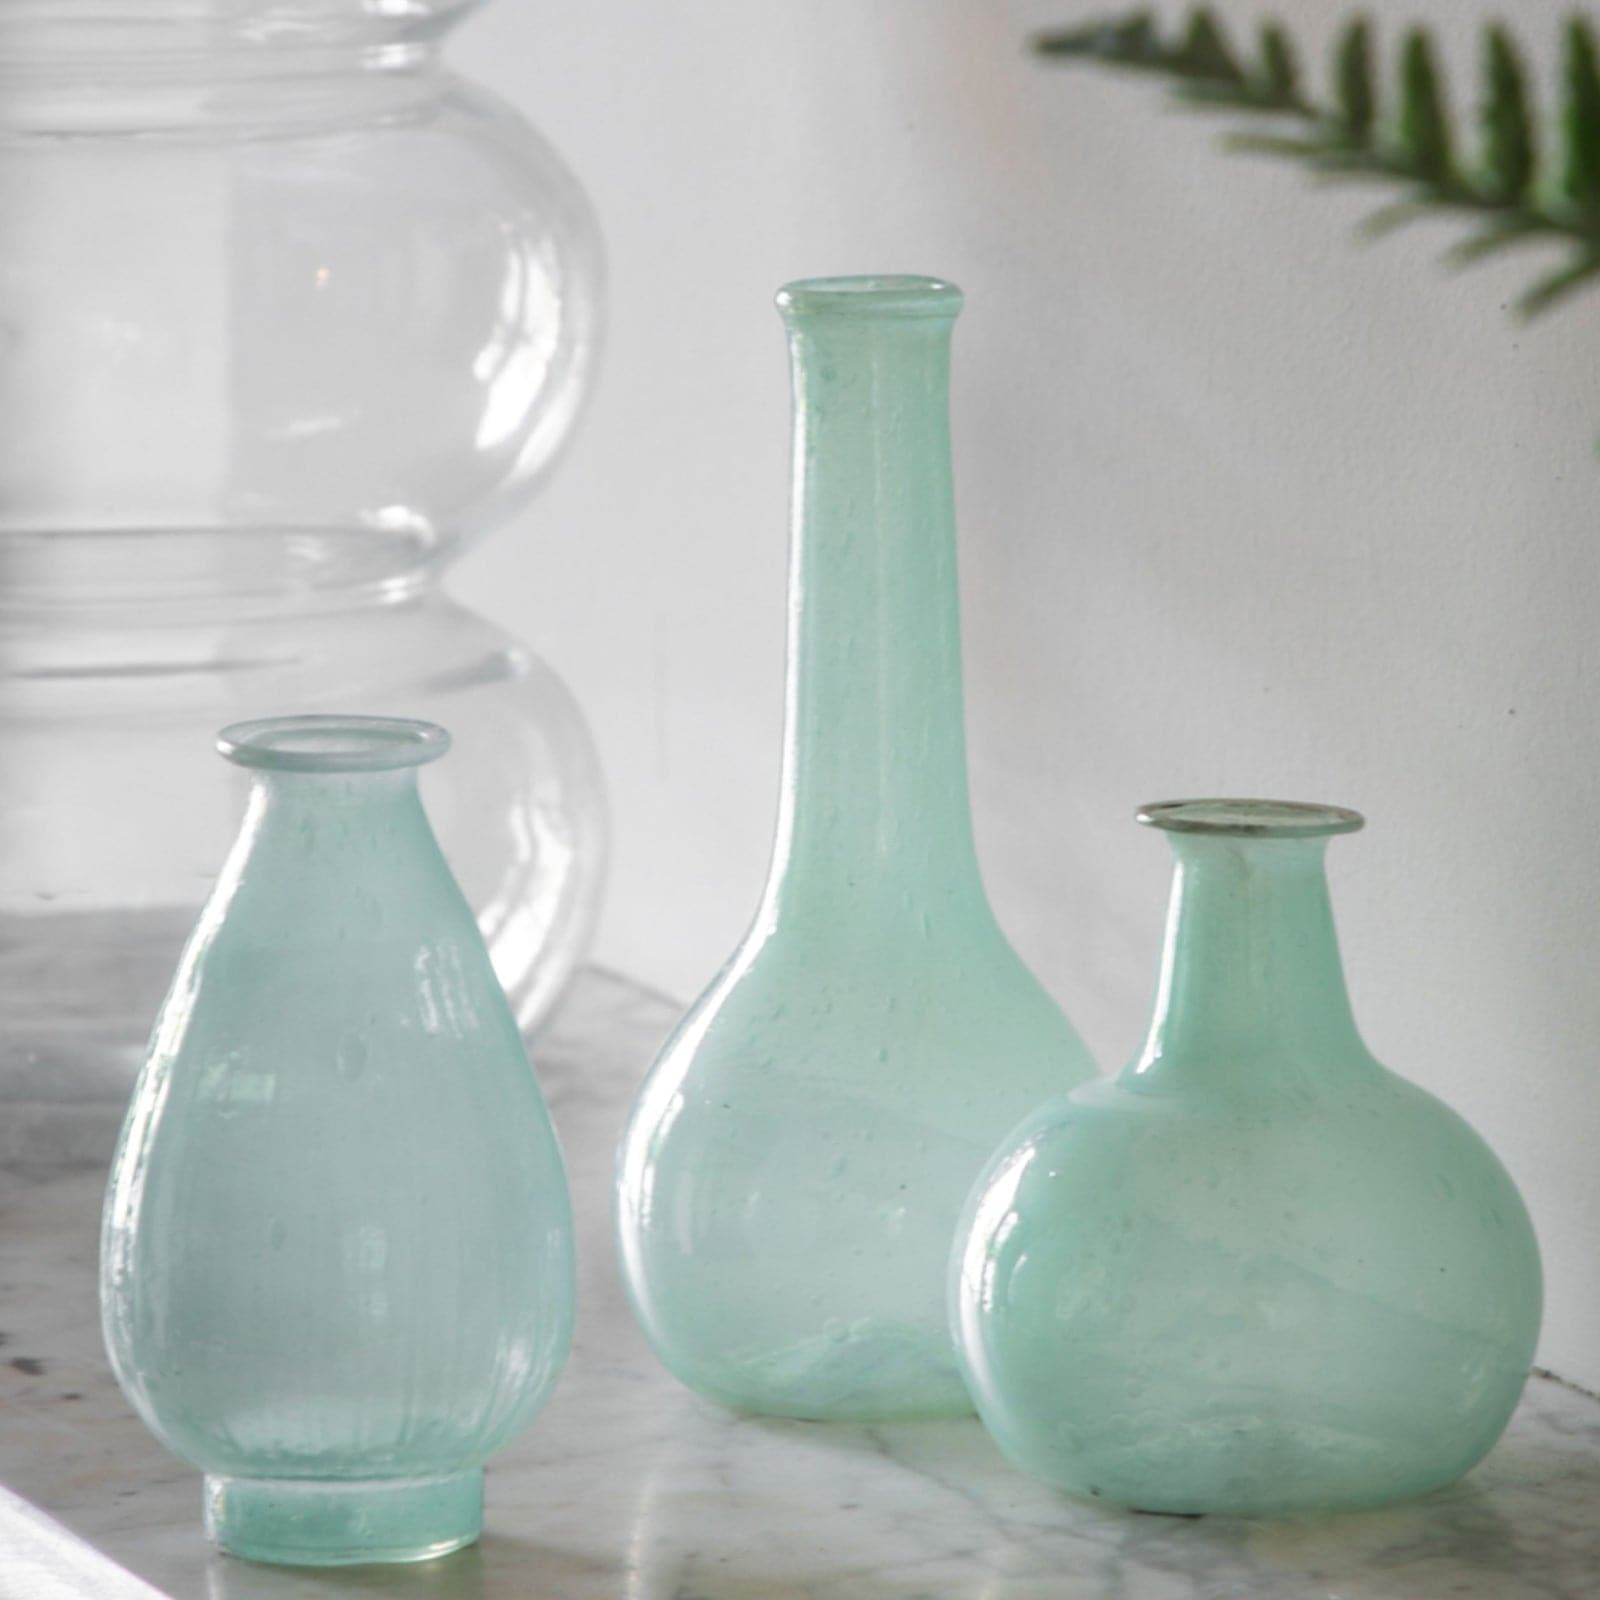 Set of 3 Ice Blue Decorative Vases - The Farthing